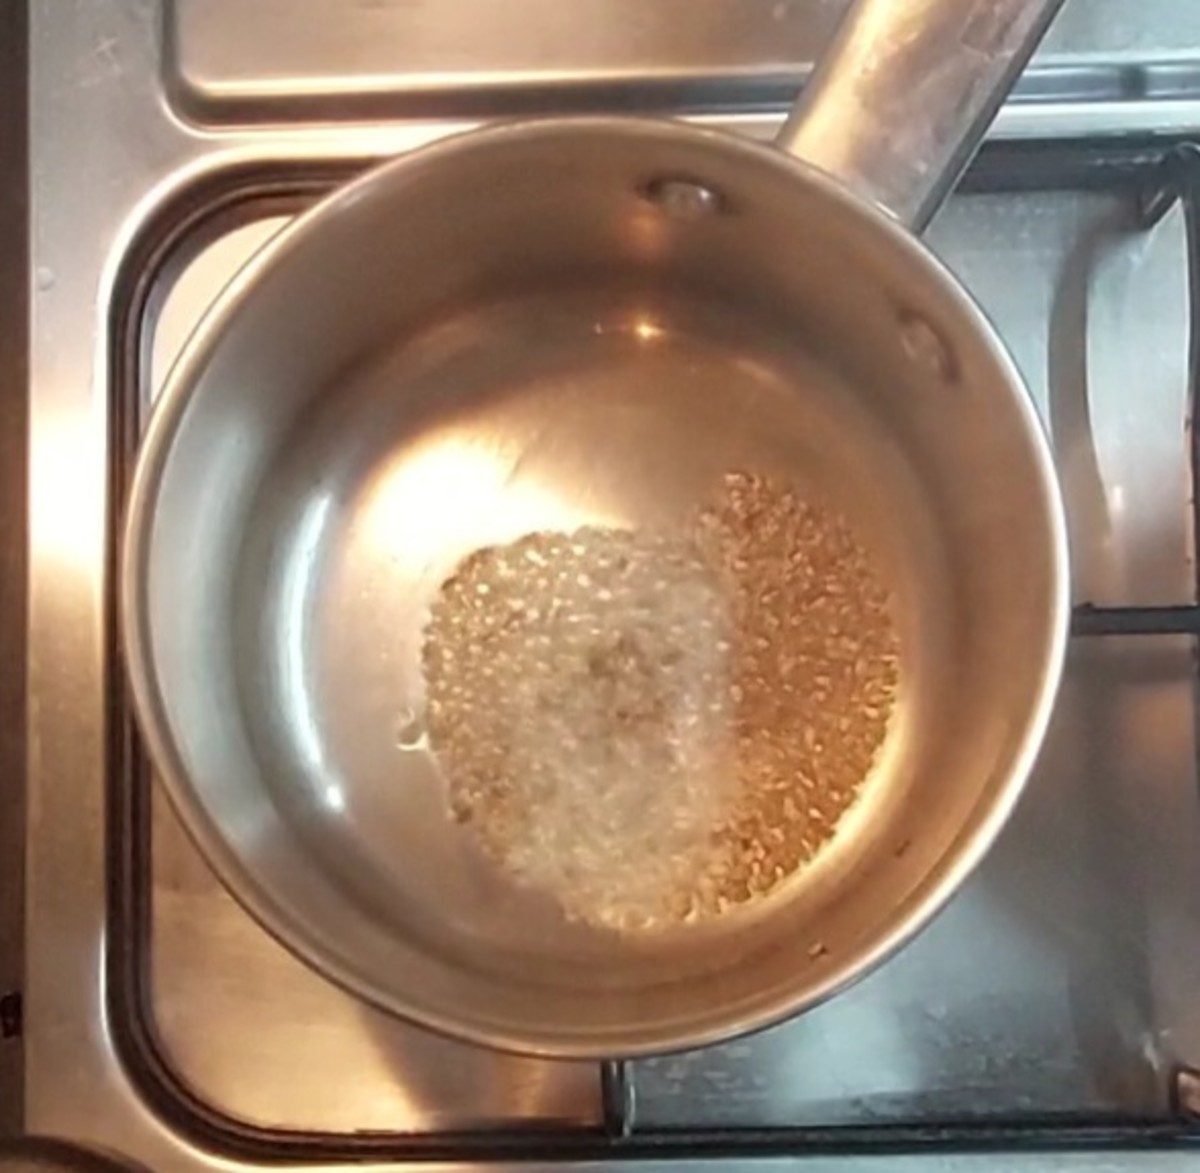 In a pan, heat 1 teaspoon oil and splutter 1/2 teaspoon cumin seeds.